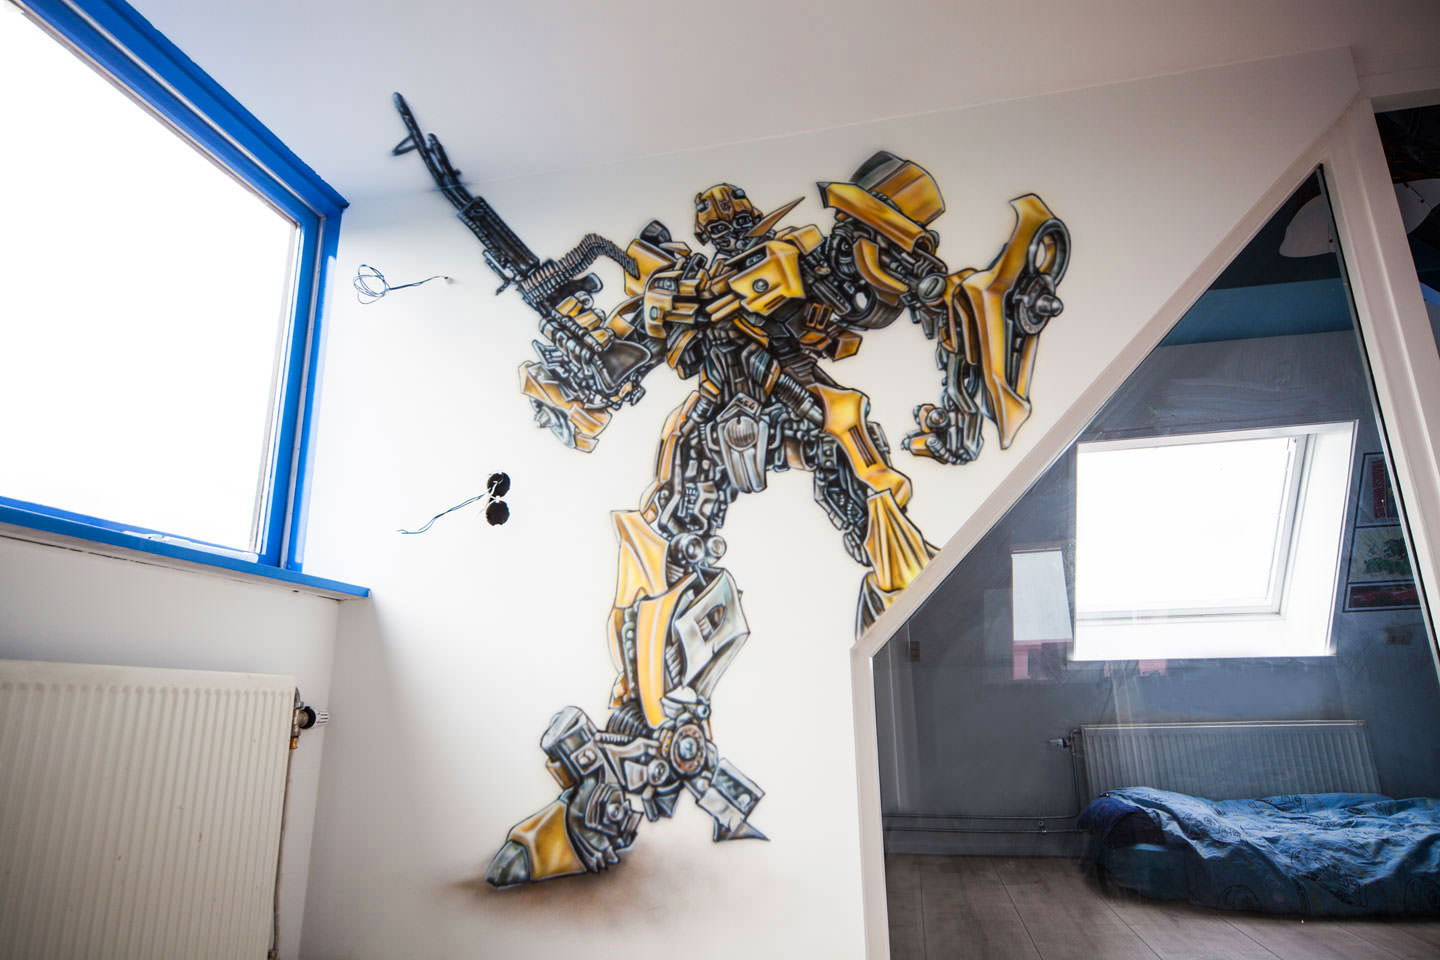 Stoere Transformer Bumblebee airbrush muurschildering in jongenskamer.